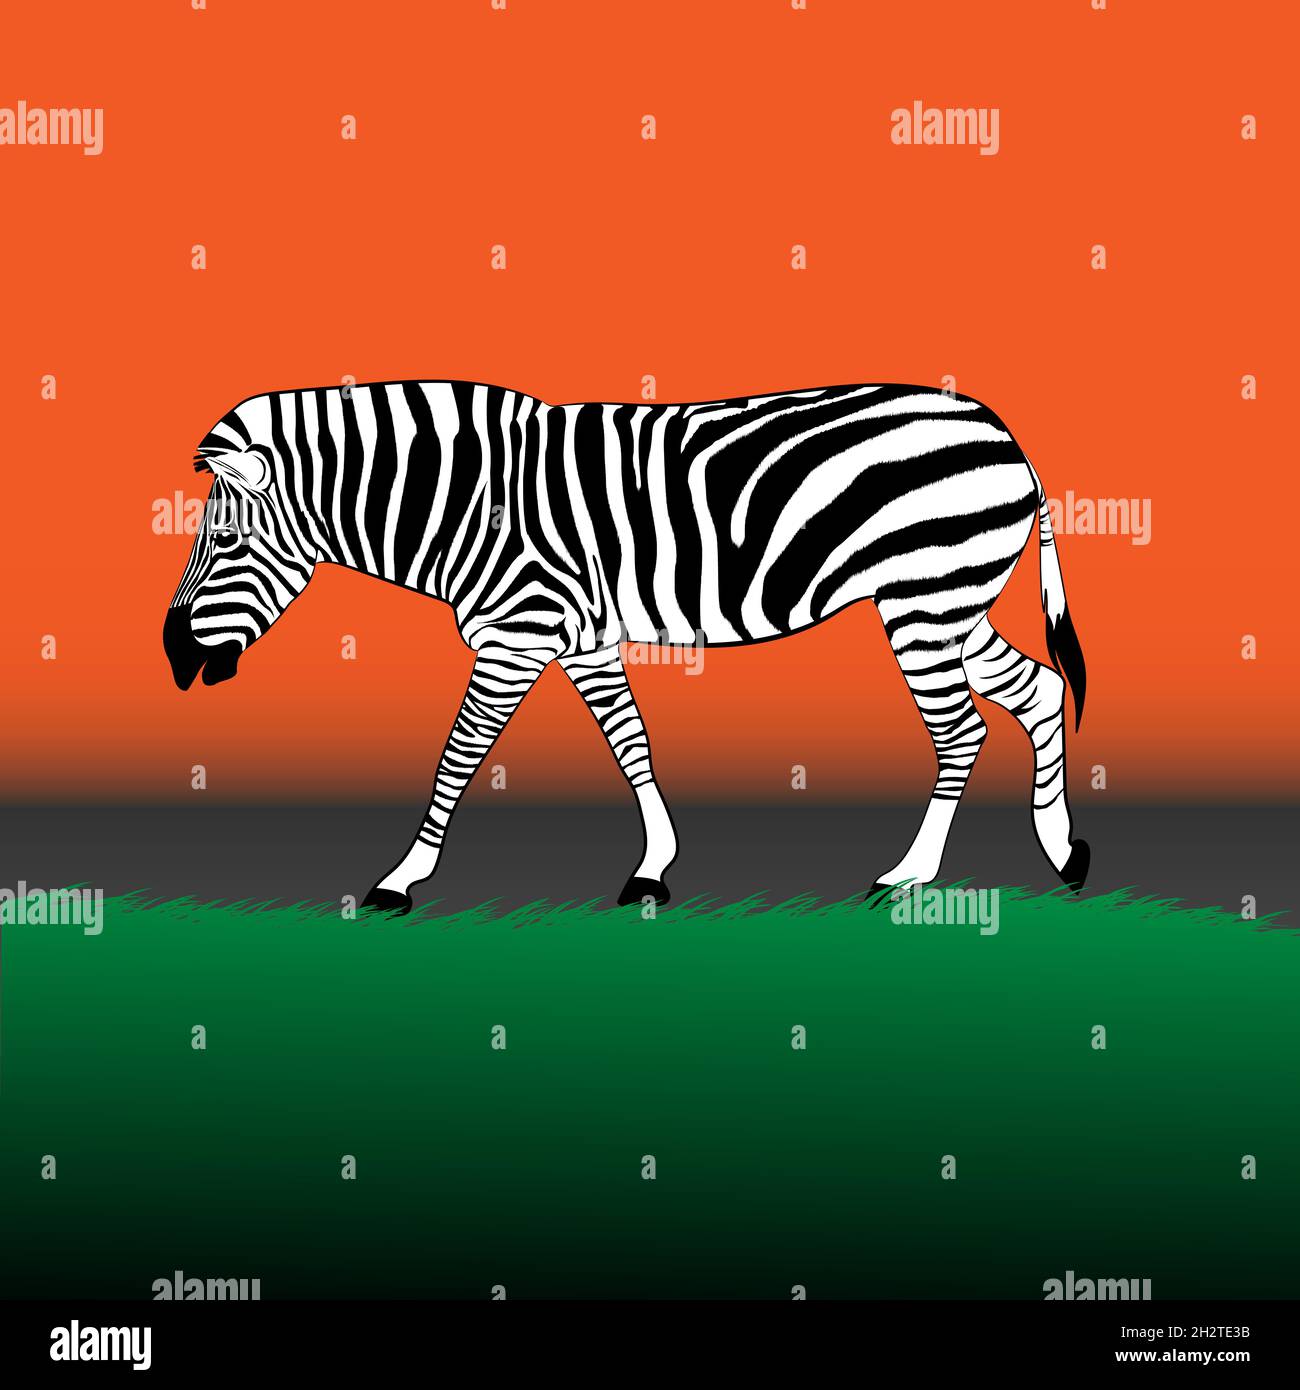 zebra walking on the grass at graphics design vector illustration Stock Vector